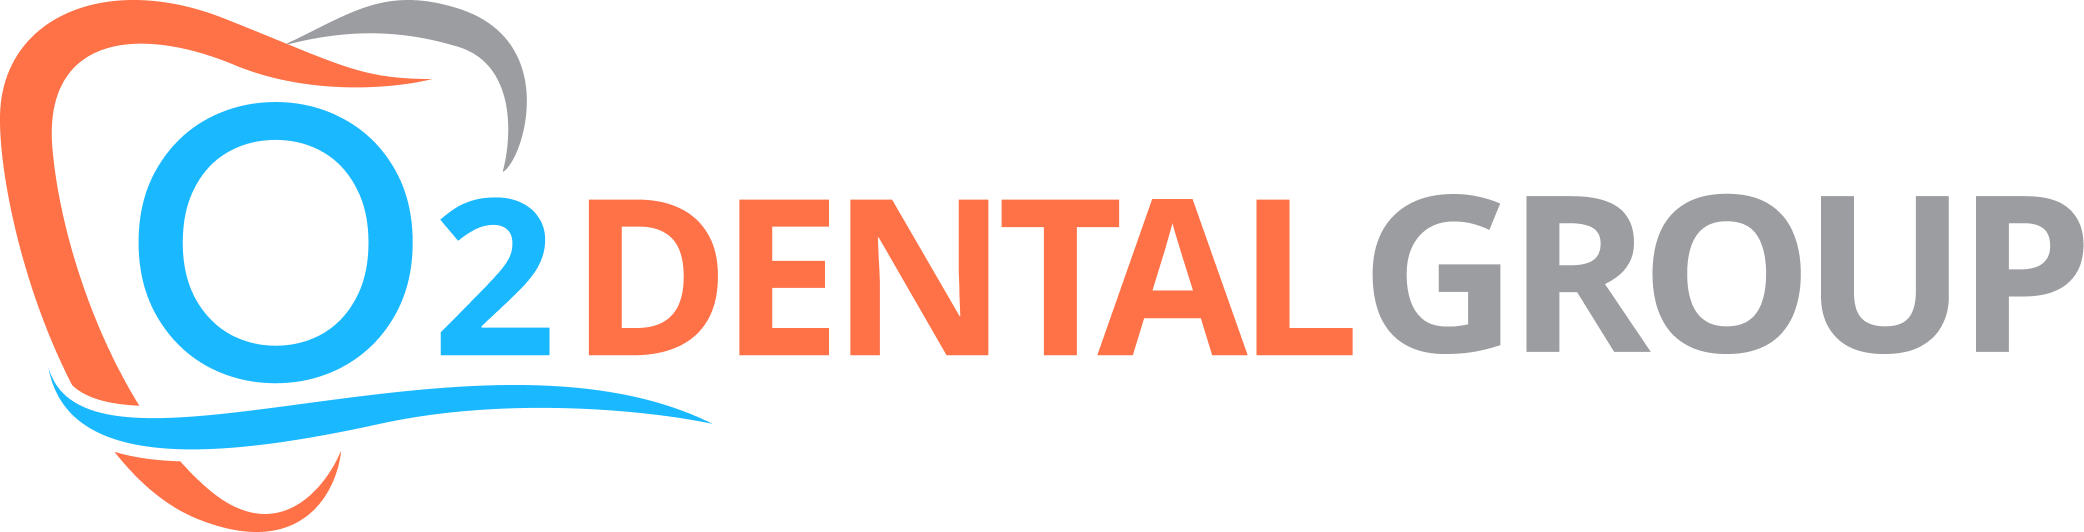 O2 Dental Group of Wilmington - logotipo